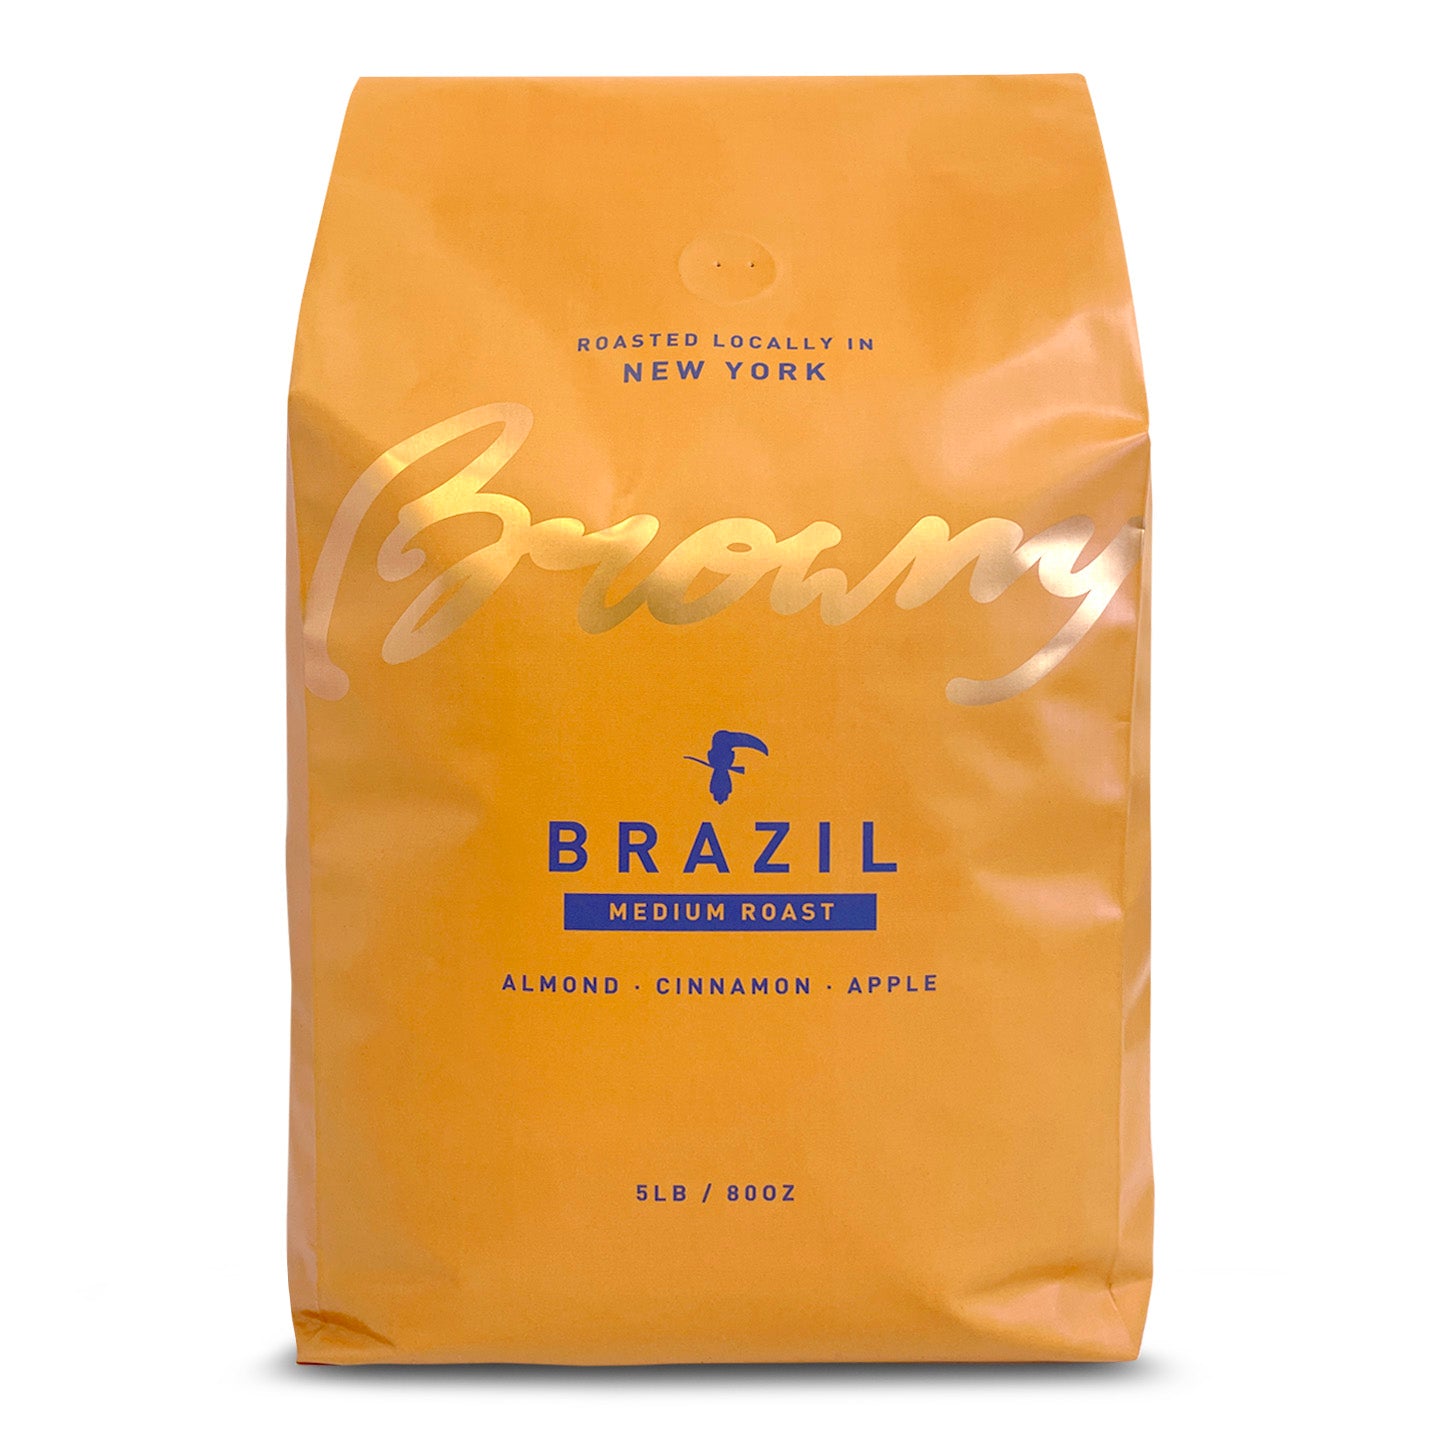 BRAZIL, Medium Roast